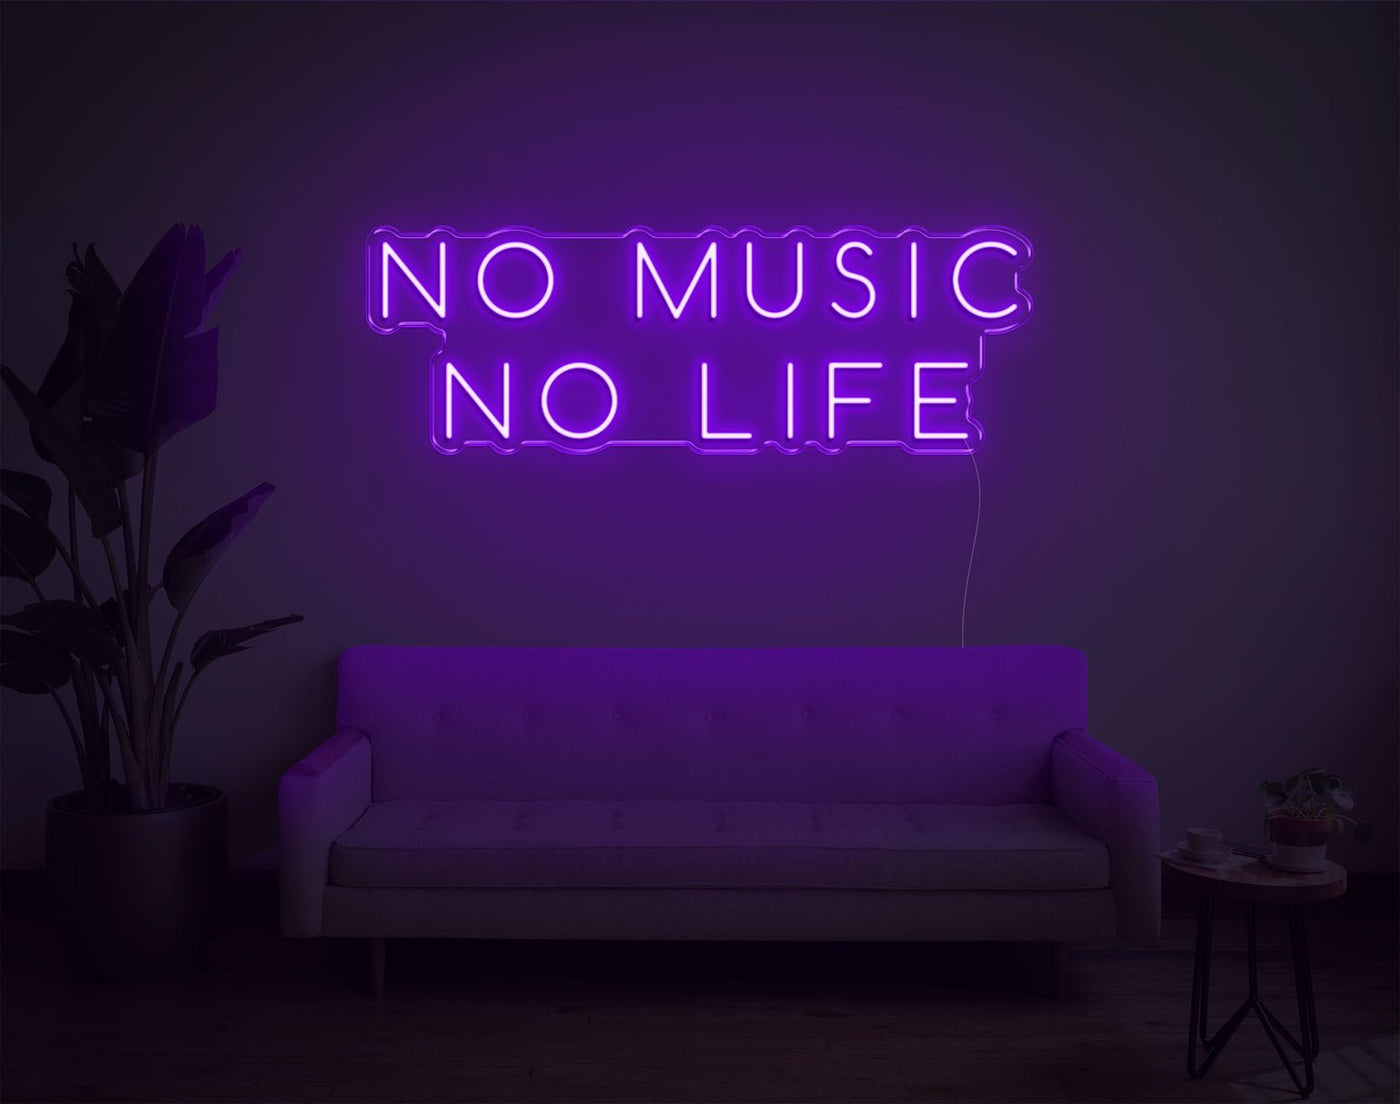 No Music No Life LED Neon Sign - 12inch x 34inchPurple